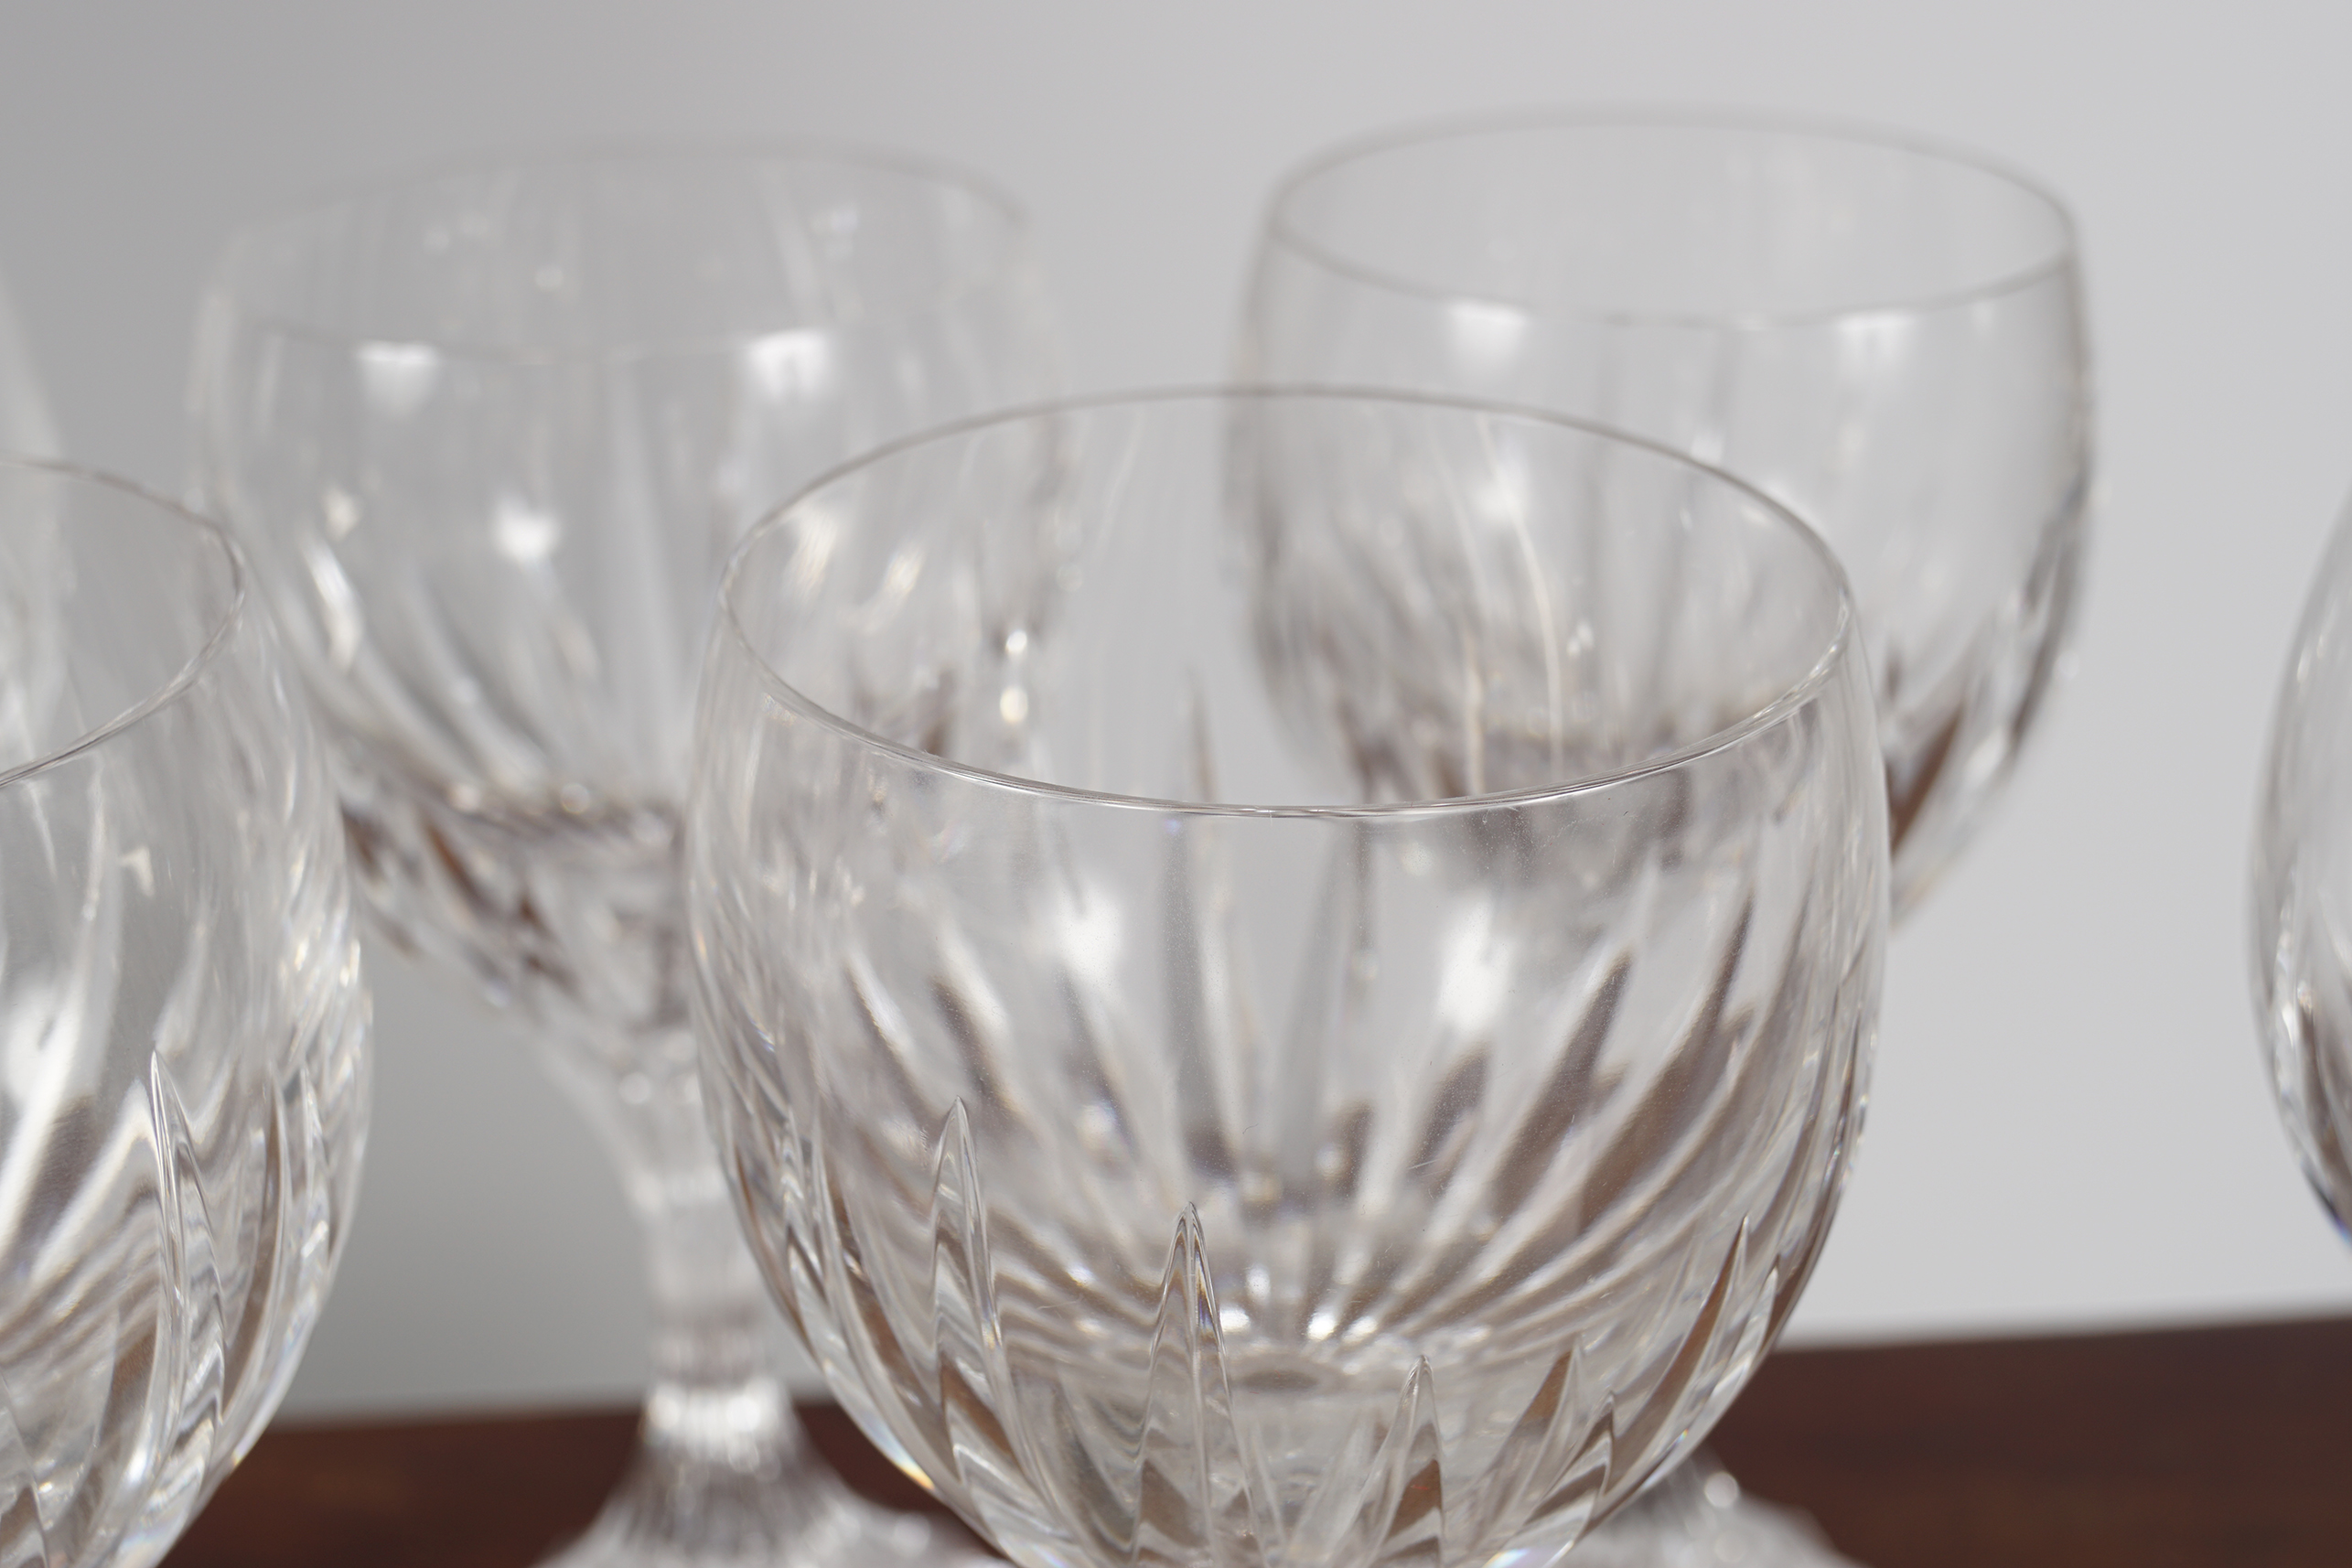 SET OF 6 BACCARAT WINE GLASSES - Image 2 of 3